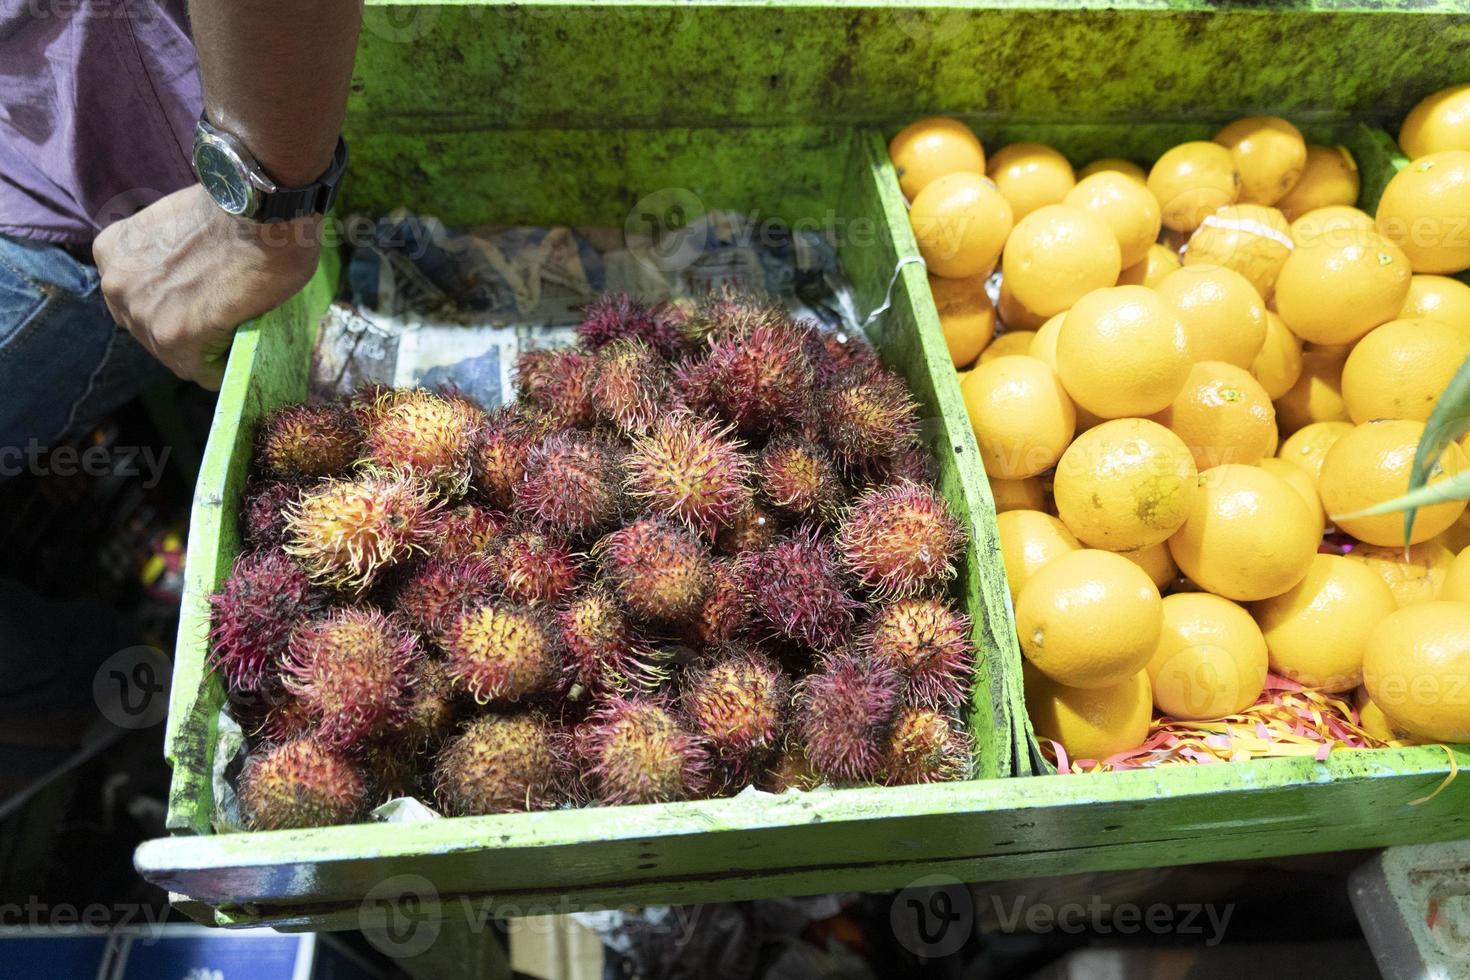 Male Maldives fruit and vegetables market photo